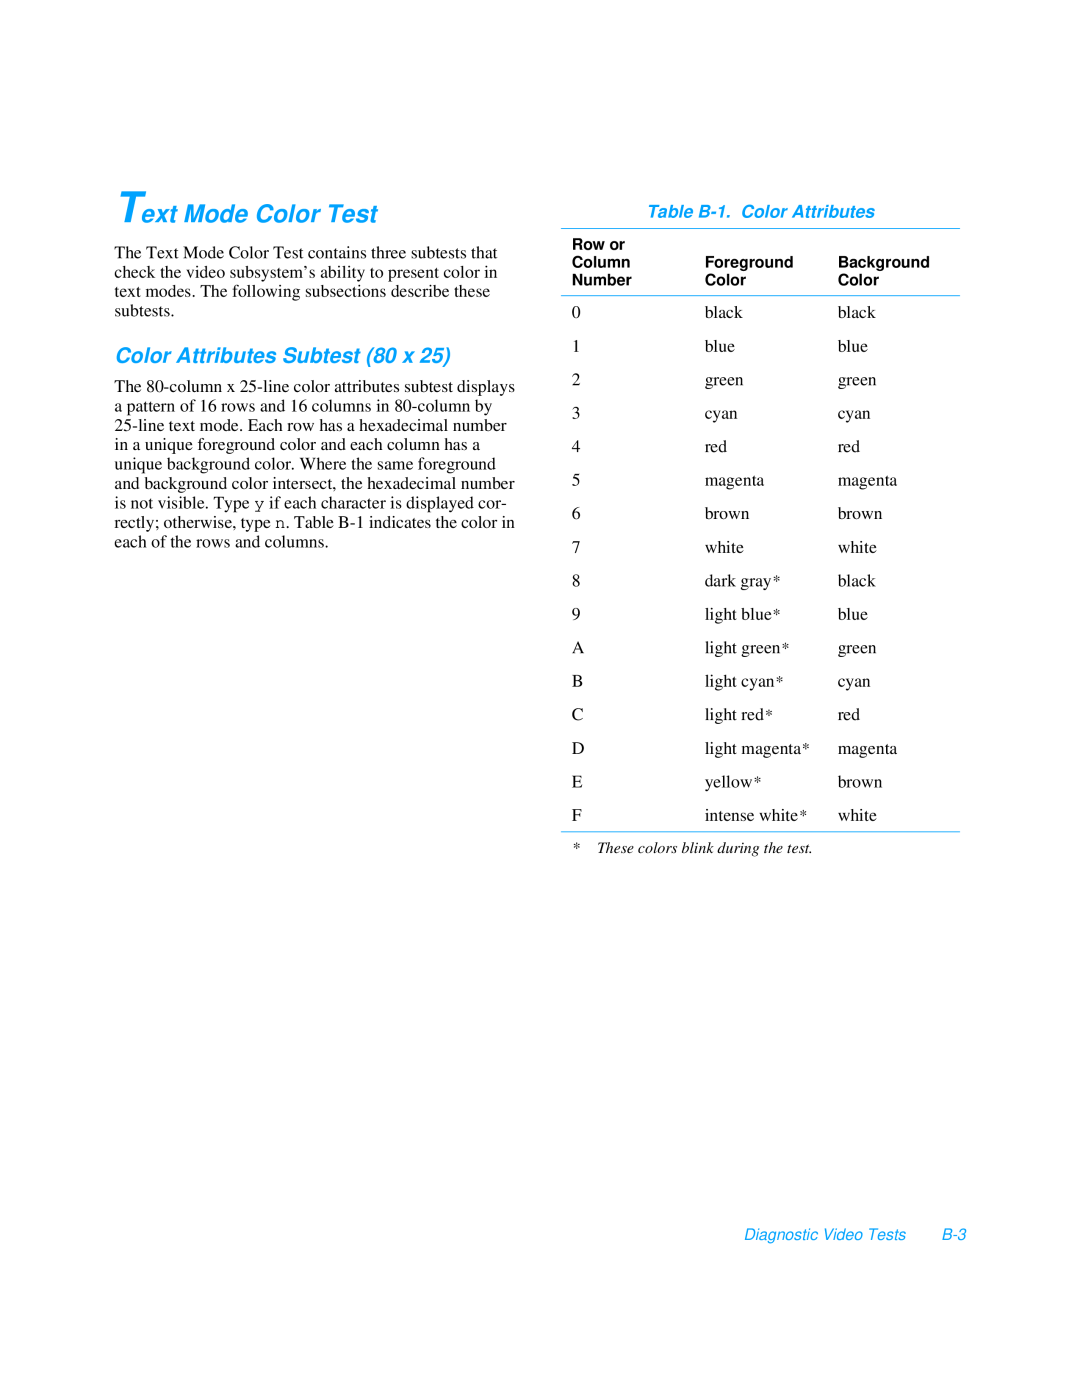 Dell 3000 manual Text Mode Color Test, Color Attributes Subtest 80 x, Table B-1. Color Attributes 